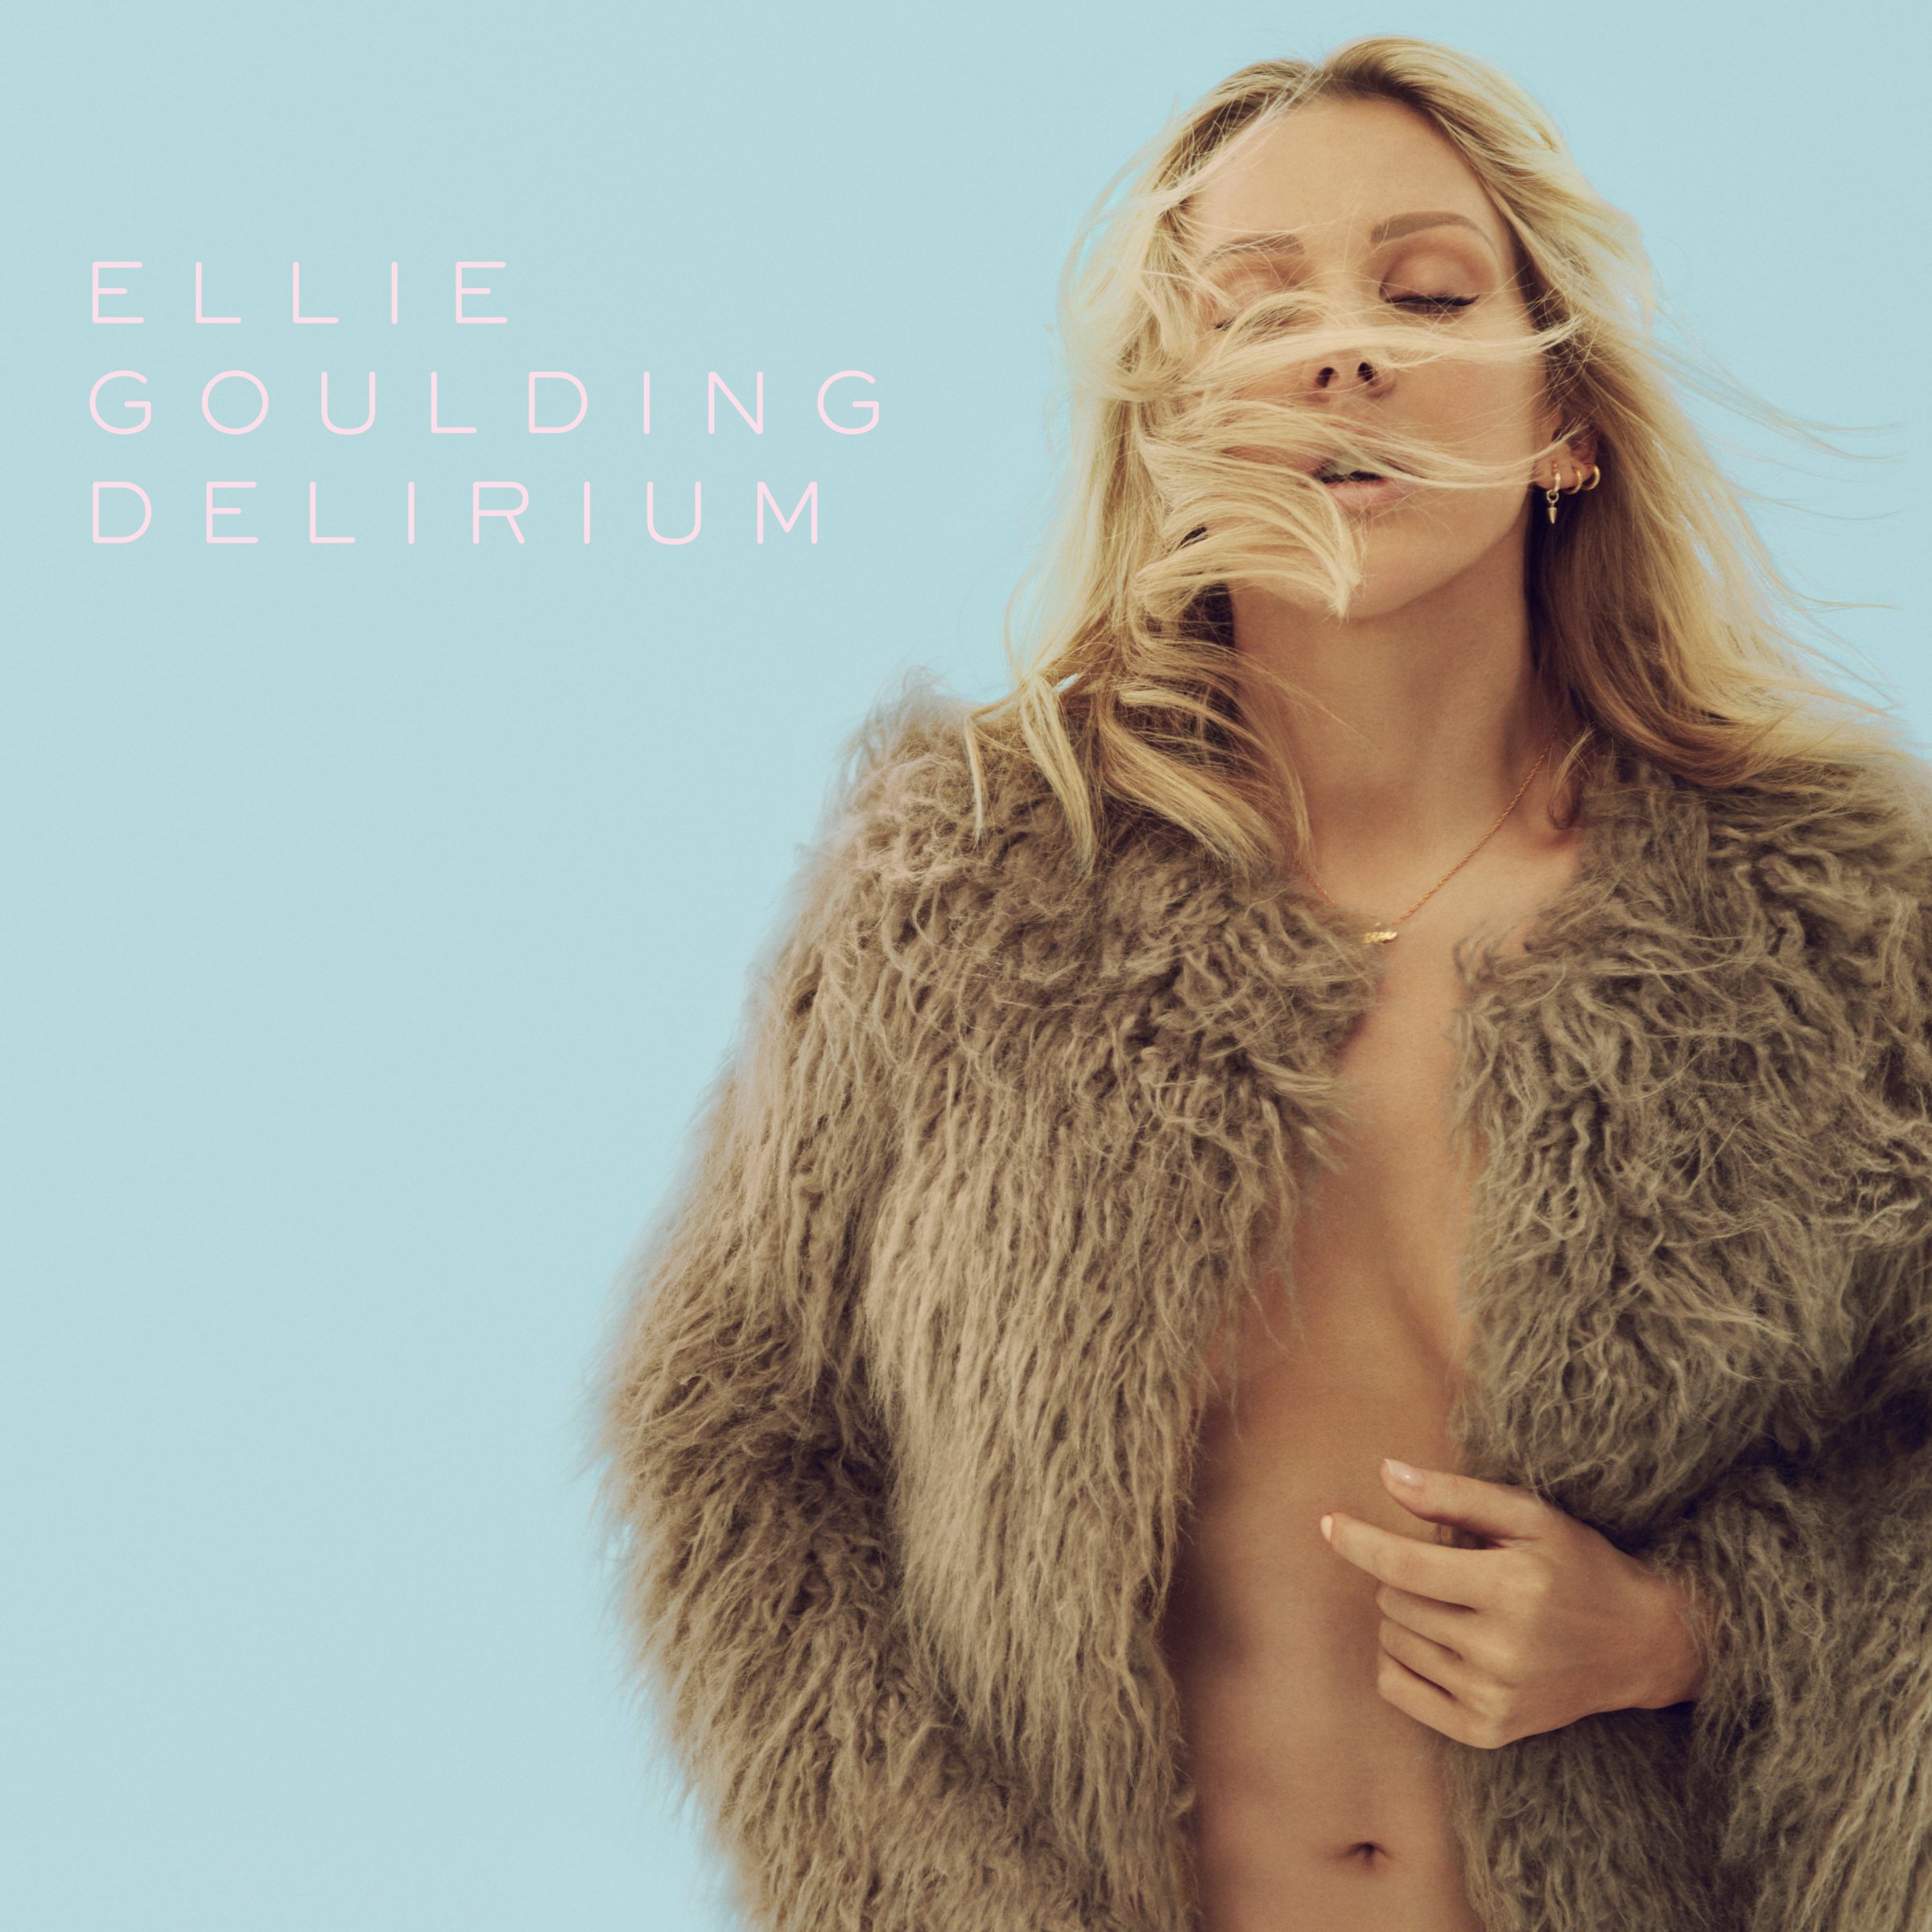 Review: Ellie Goulding's 'Delirium' album